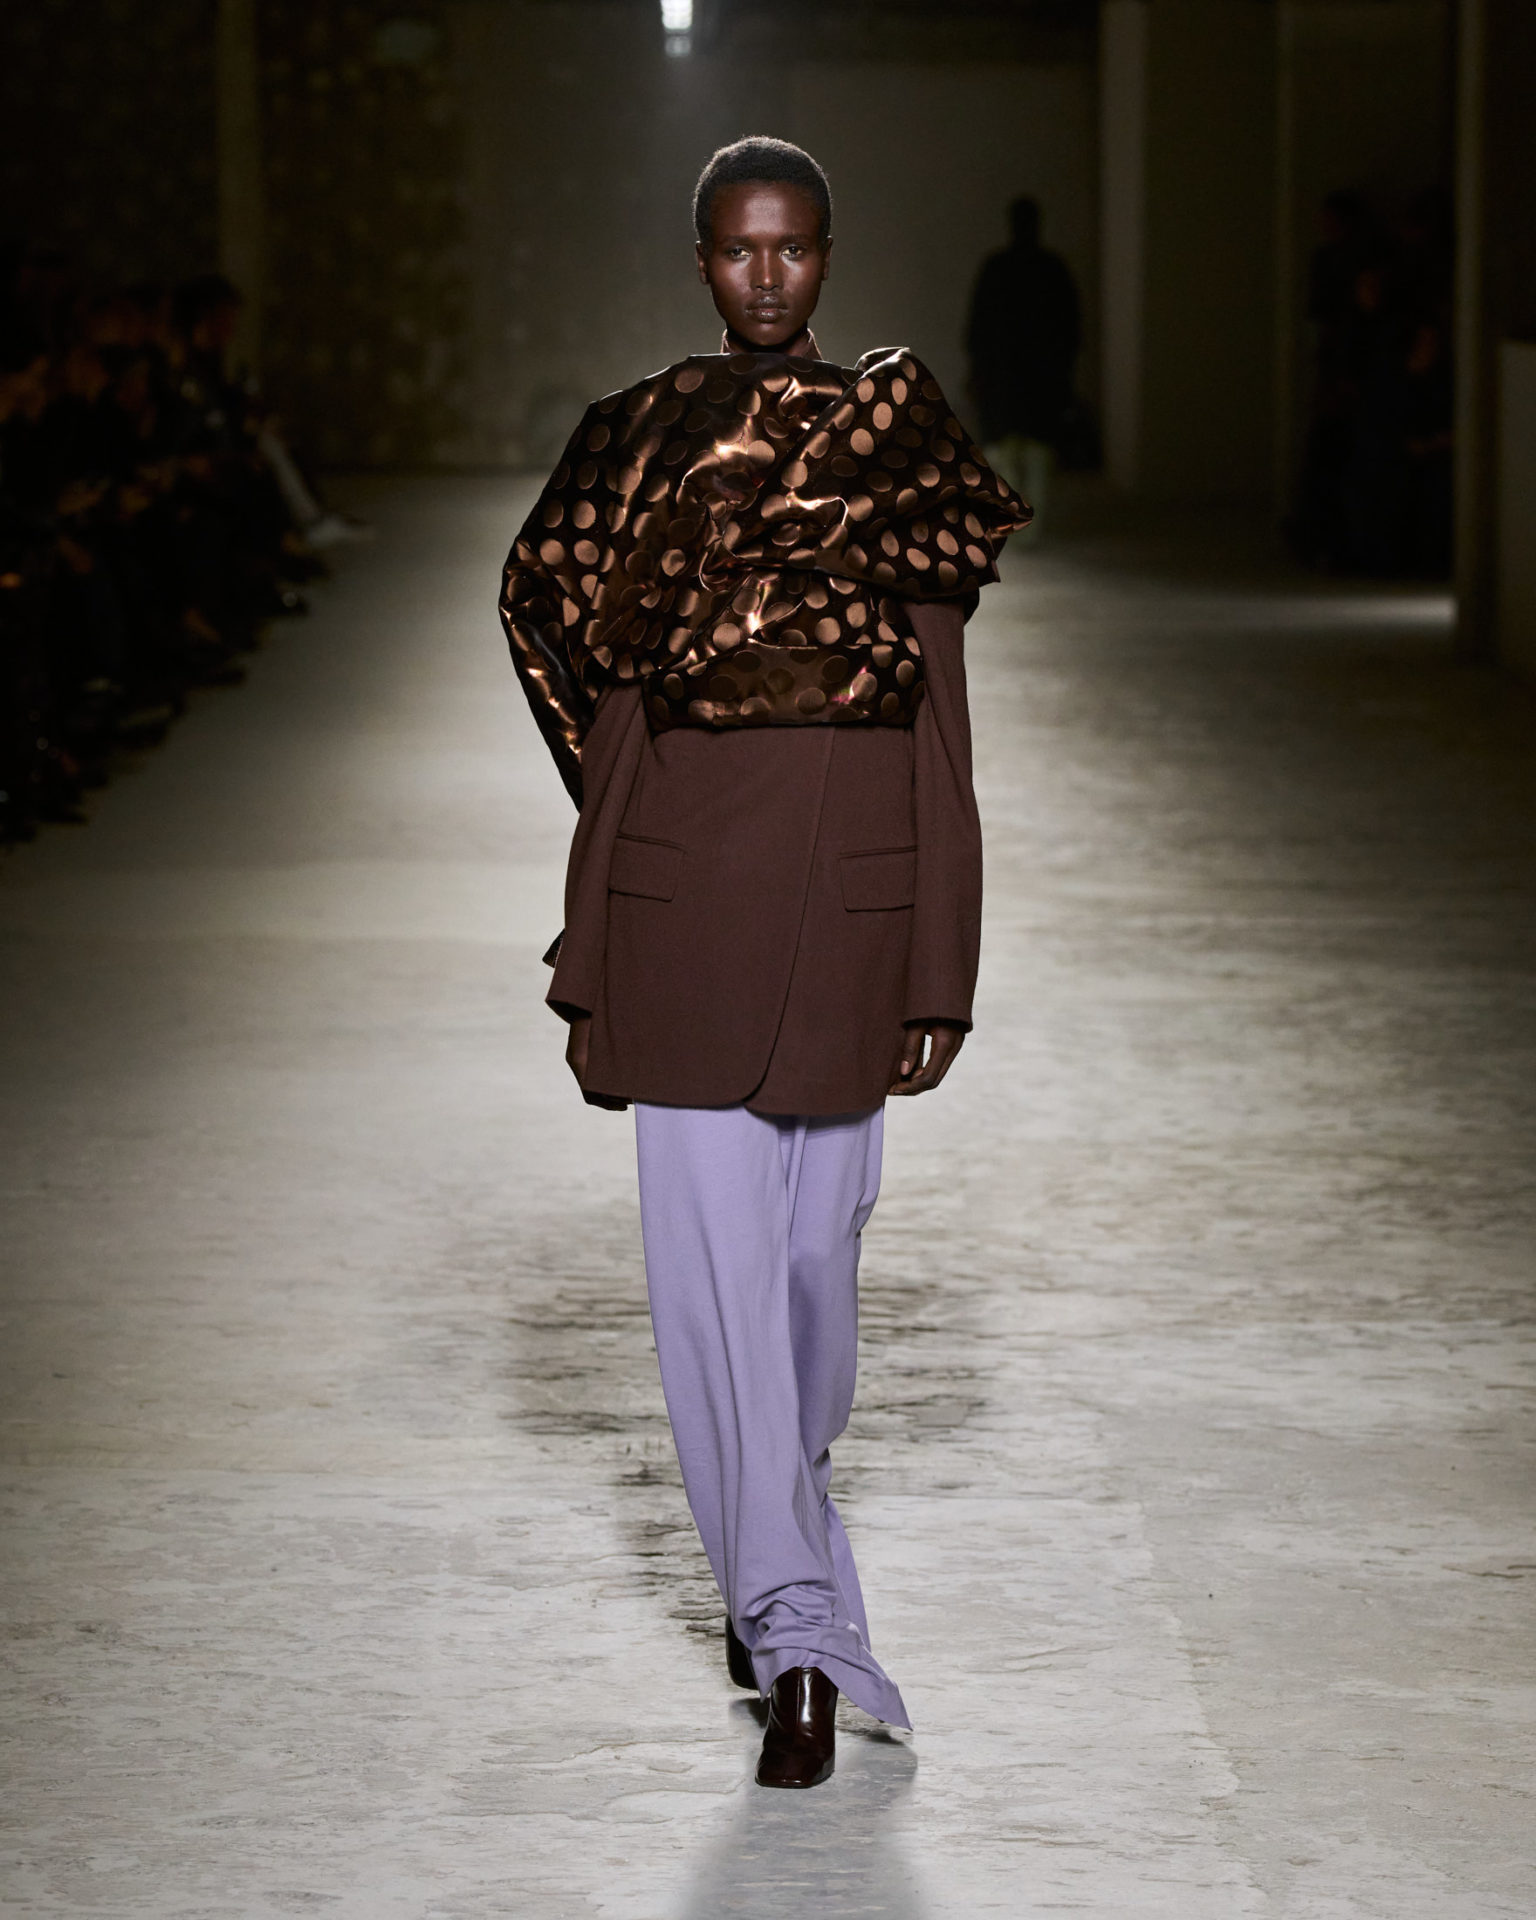 photo: Umberto Fratini / Gorunway.com – A Shaded View on Fashion